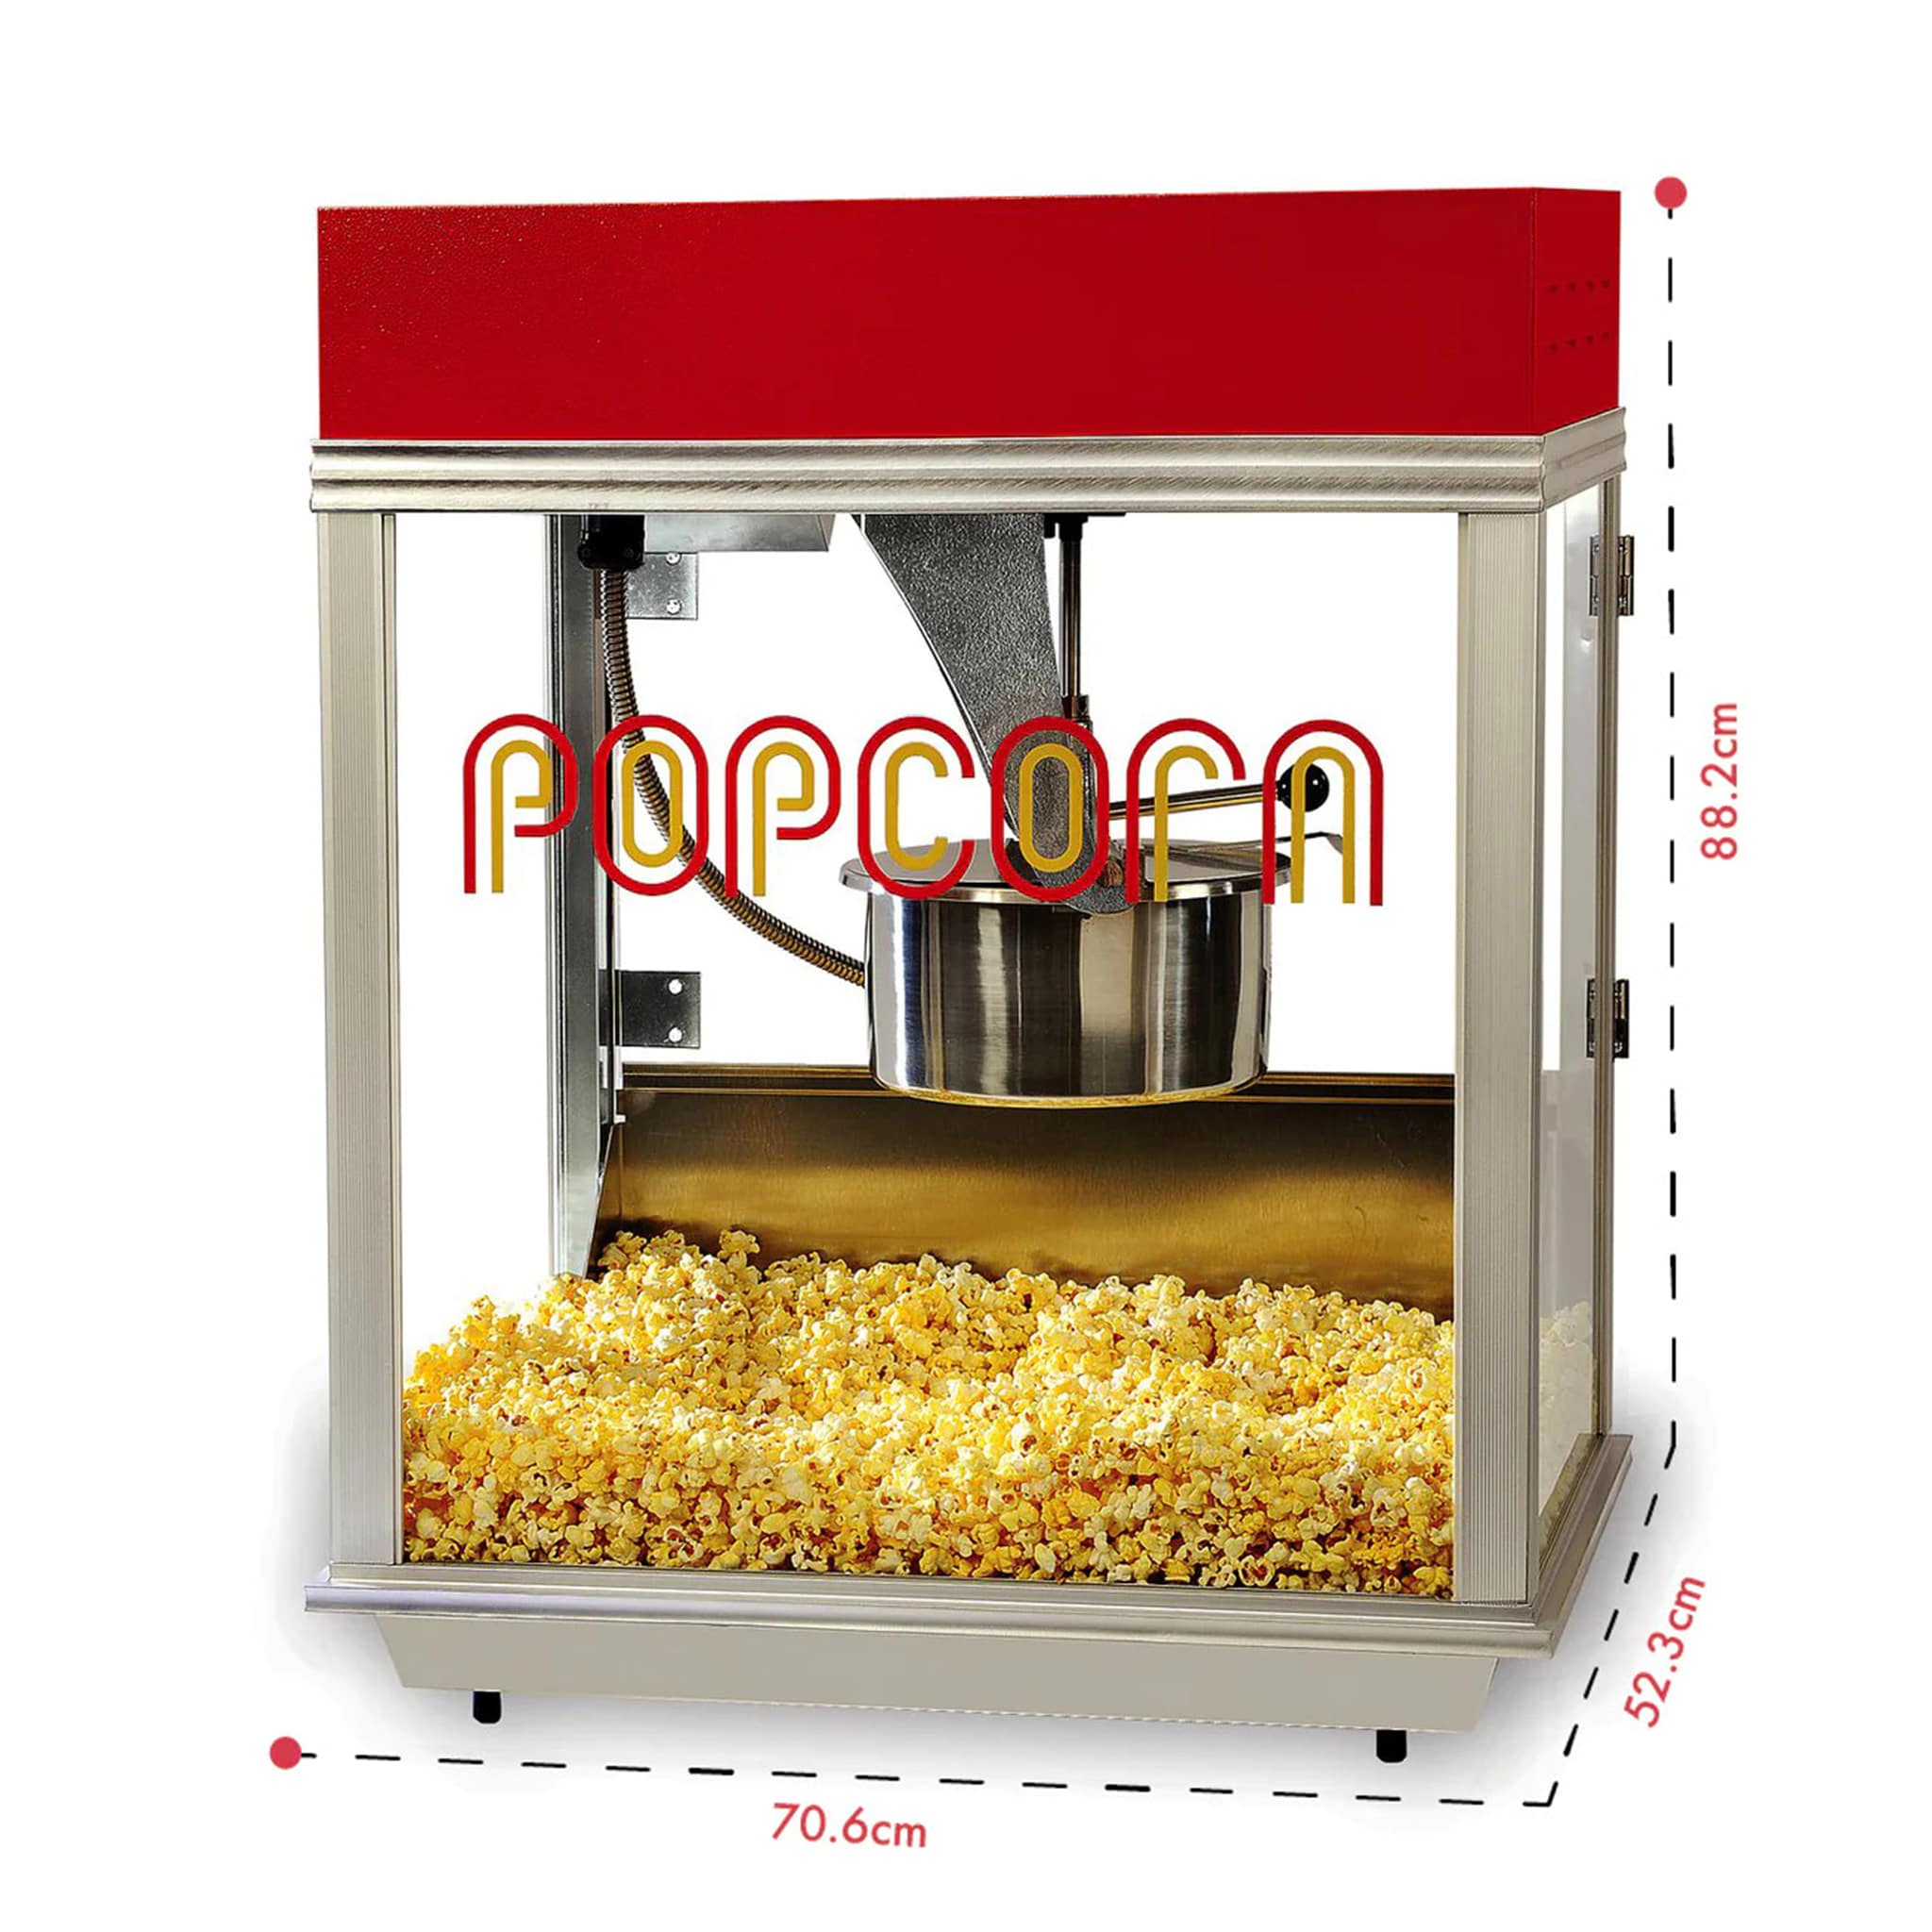 Super PopMaxx 16-oz. Popcorn Machine